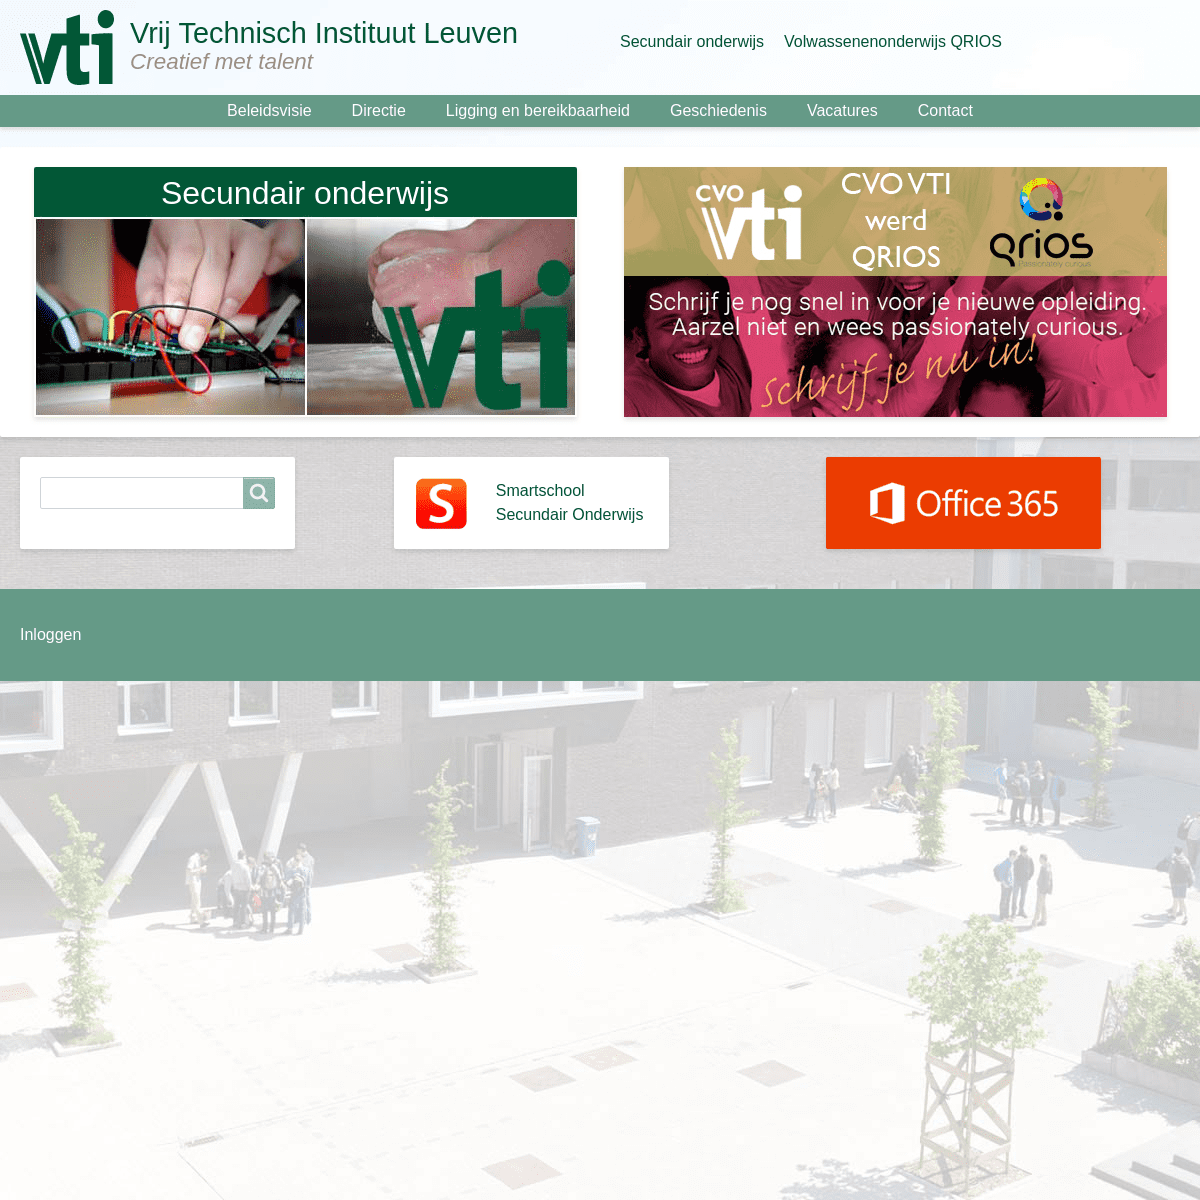 Start | Vrij Technisch Instituut Leuven